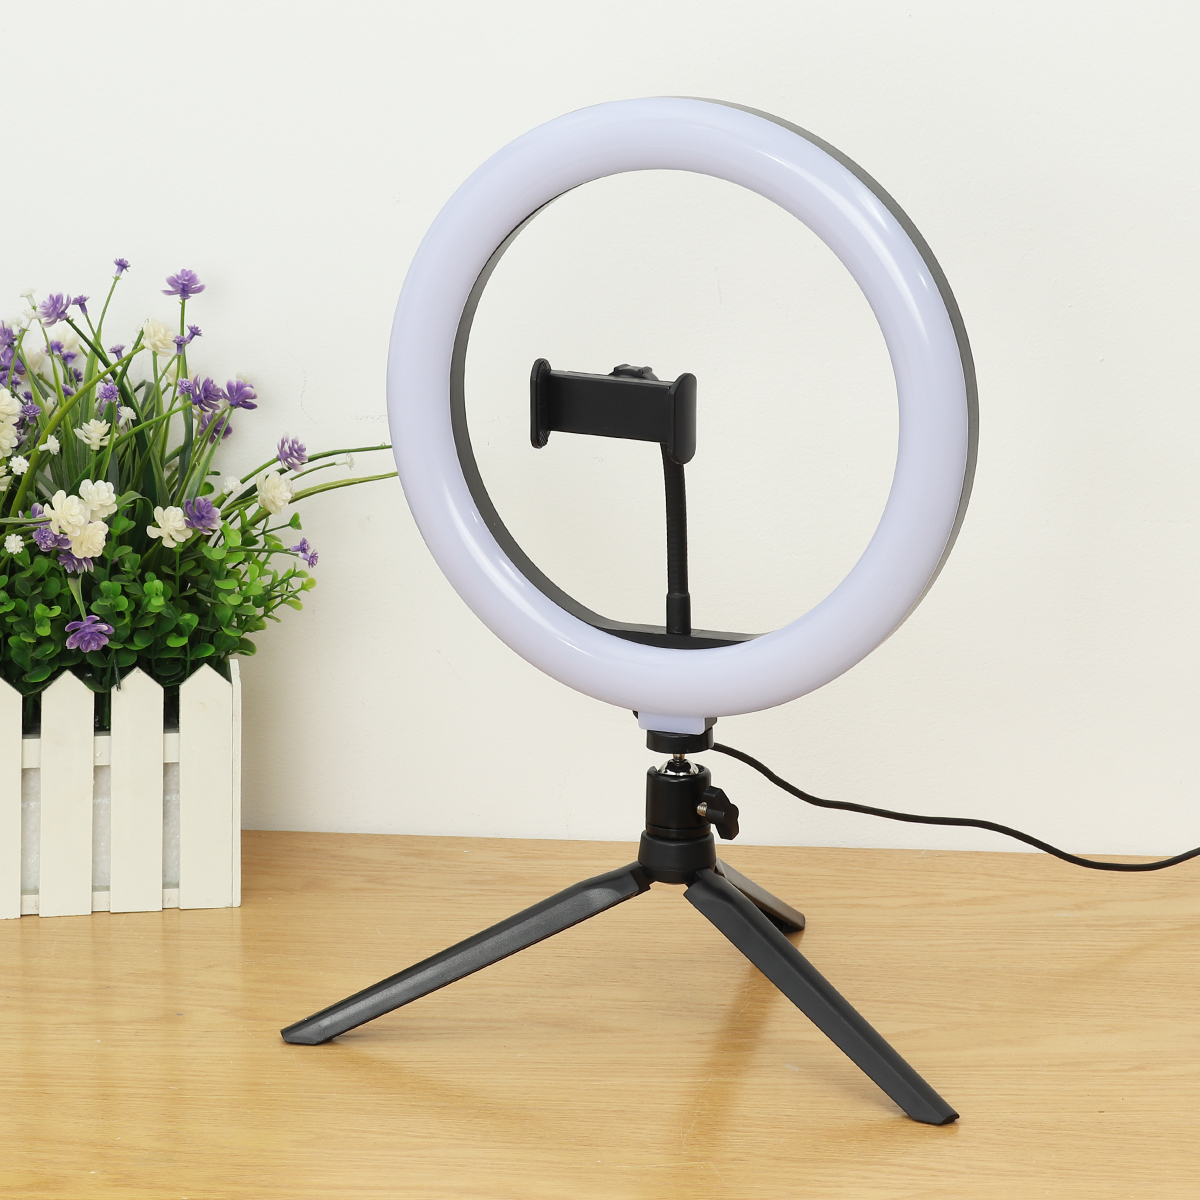 102-inch-Diameter-10-Brightness-RGB-LED-Makeup-Fill-Light-Selfie-Ring-Lamp-Phone-Holder-Tripod-Stand-1788455-12